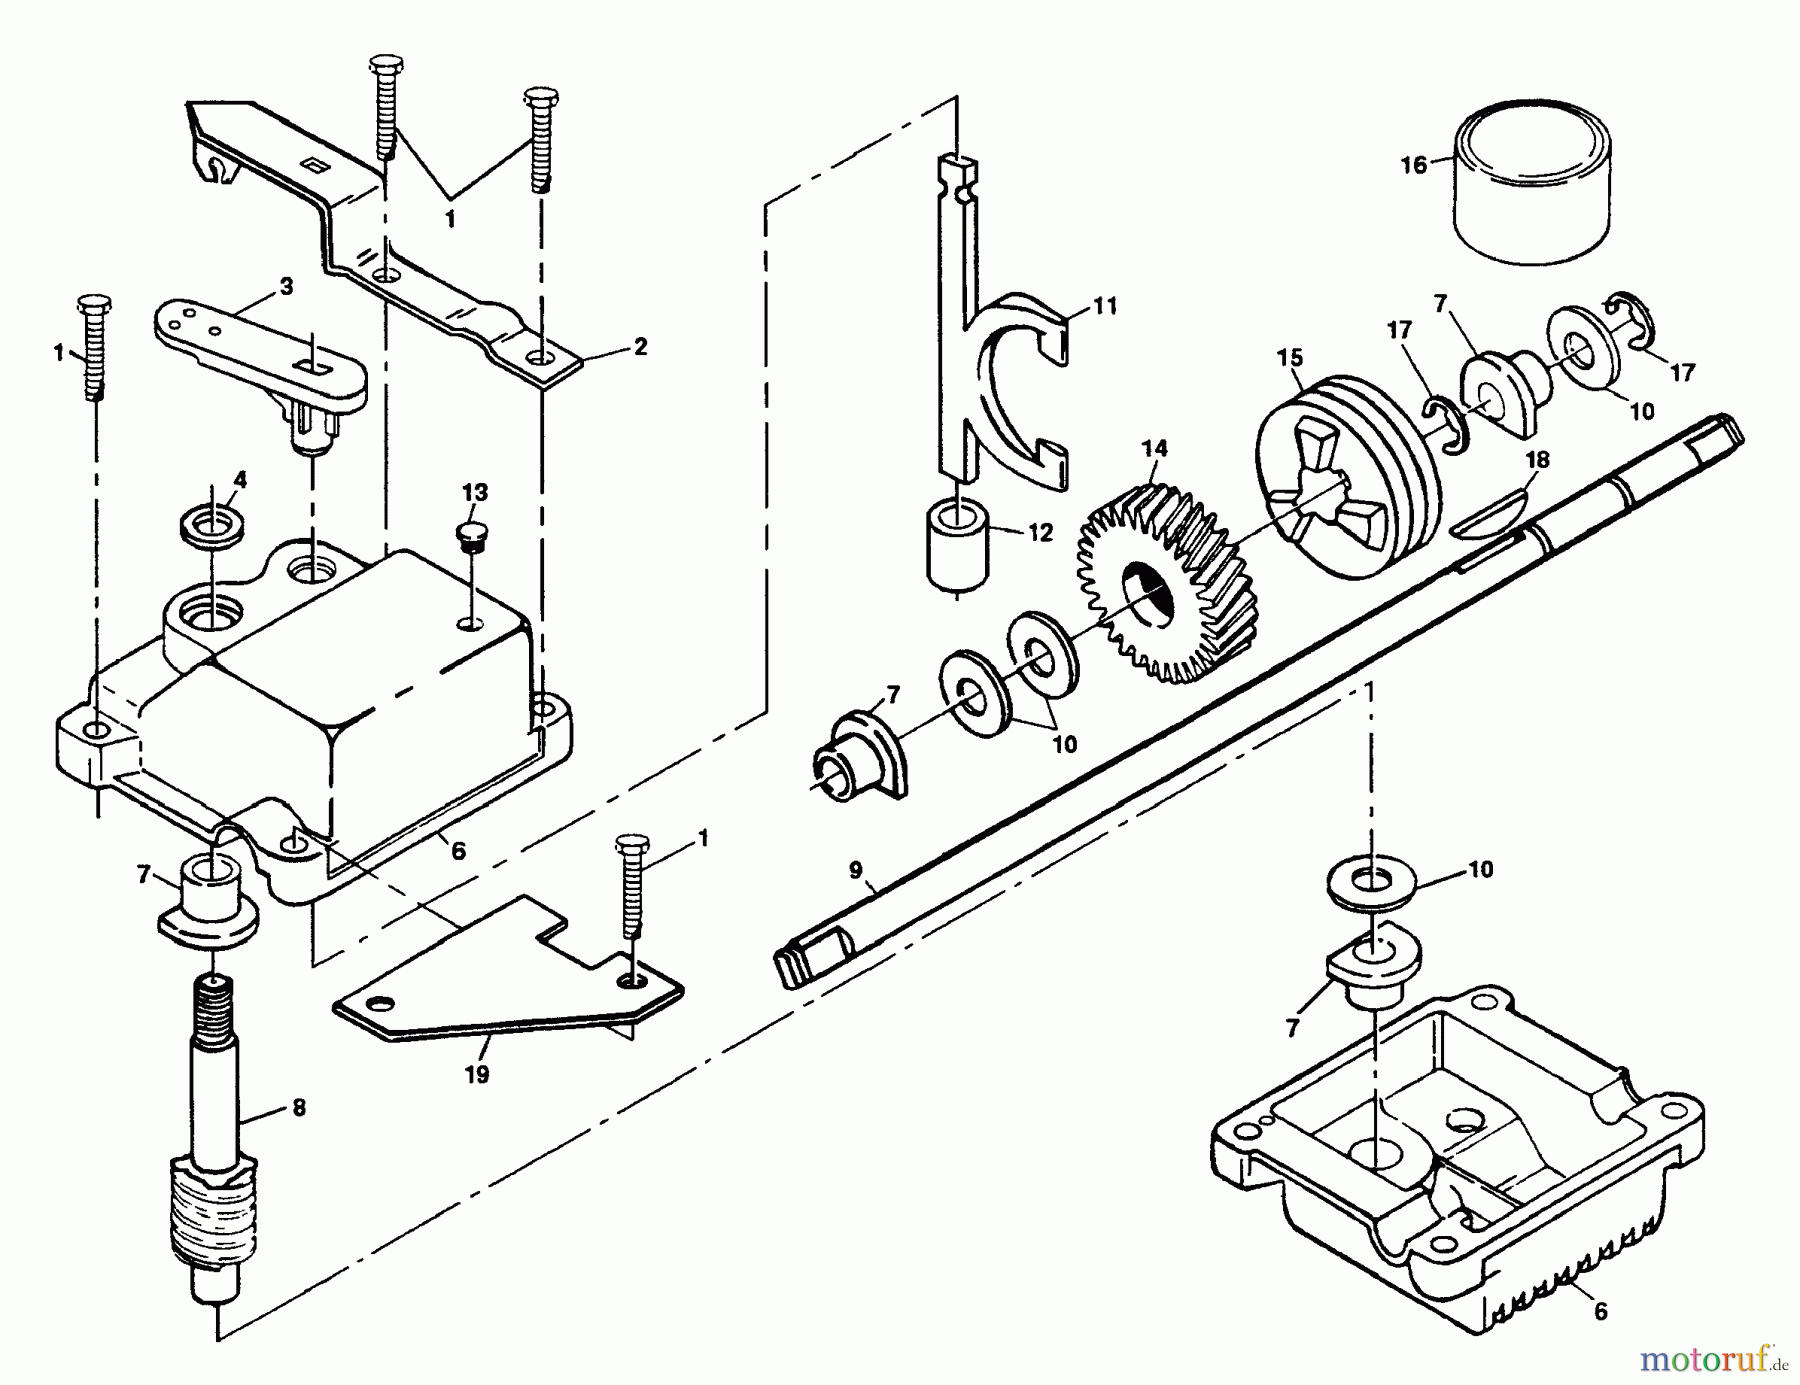  Husqvarna Rasenmäher H56 SFG (954072501) - Husqvarna Walk-Behind Mower (1995-03 & After) Gear Case Assembly